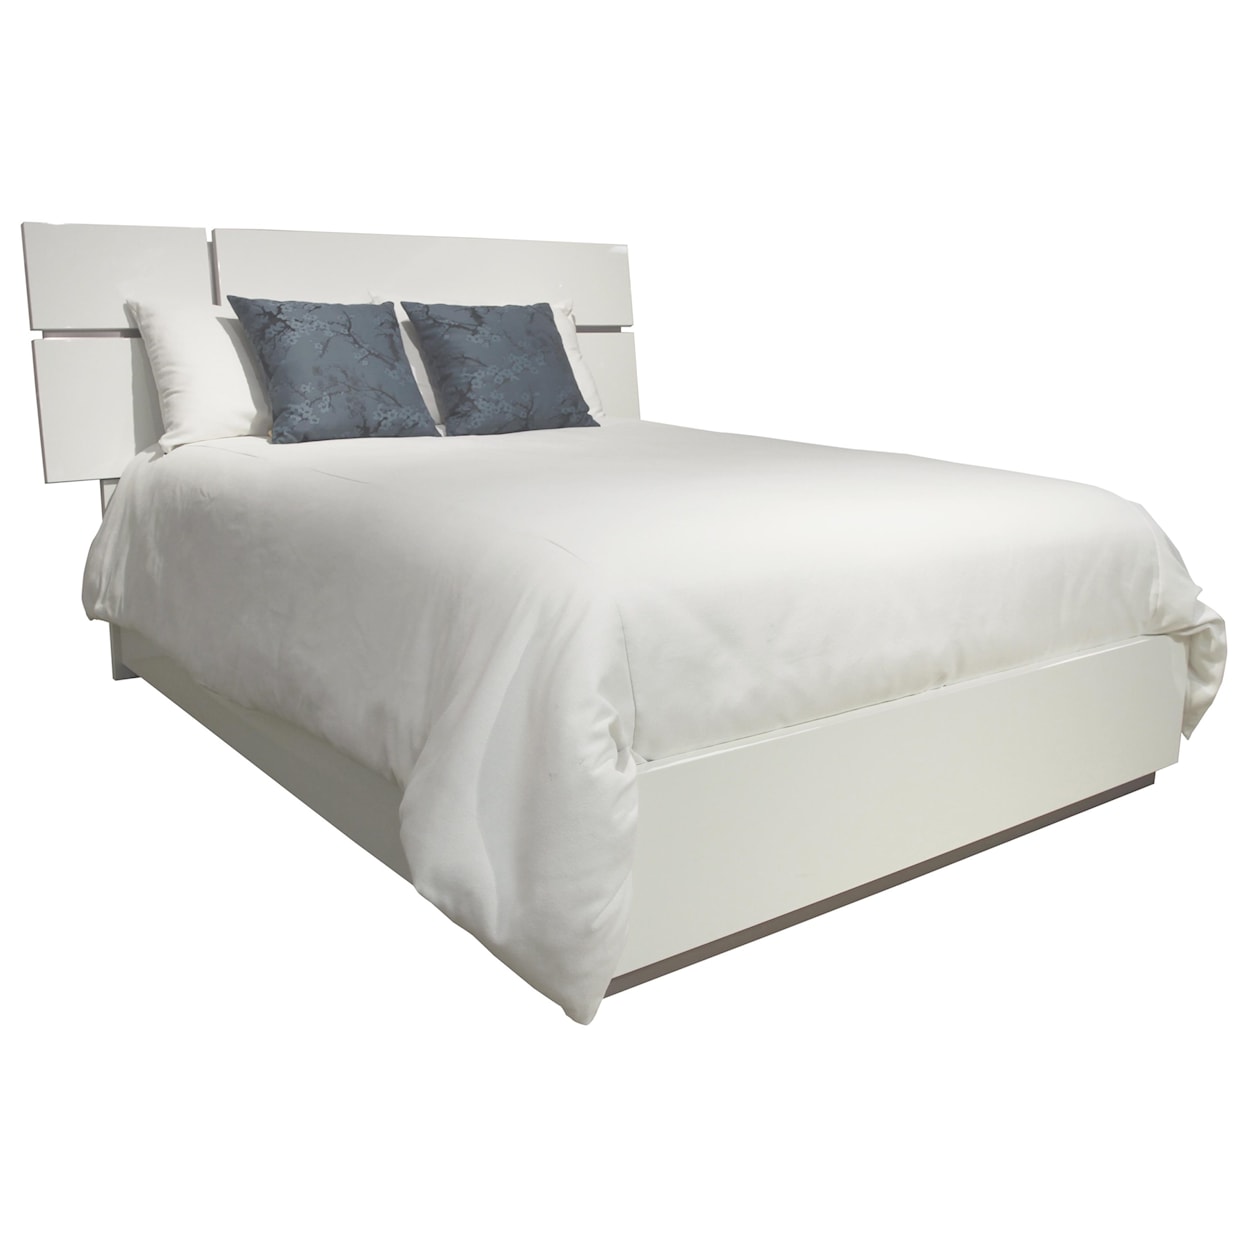 Alf Italia Artemide PJAE0150 Queen Bed | HomeWorld Furniture | Platform ...